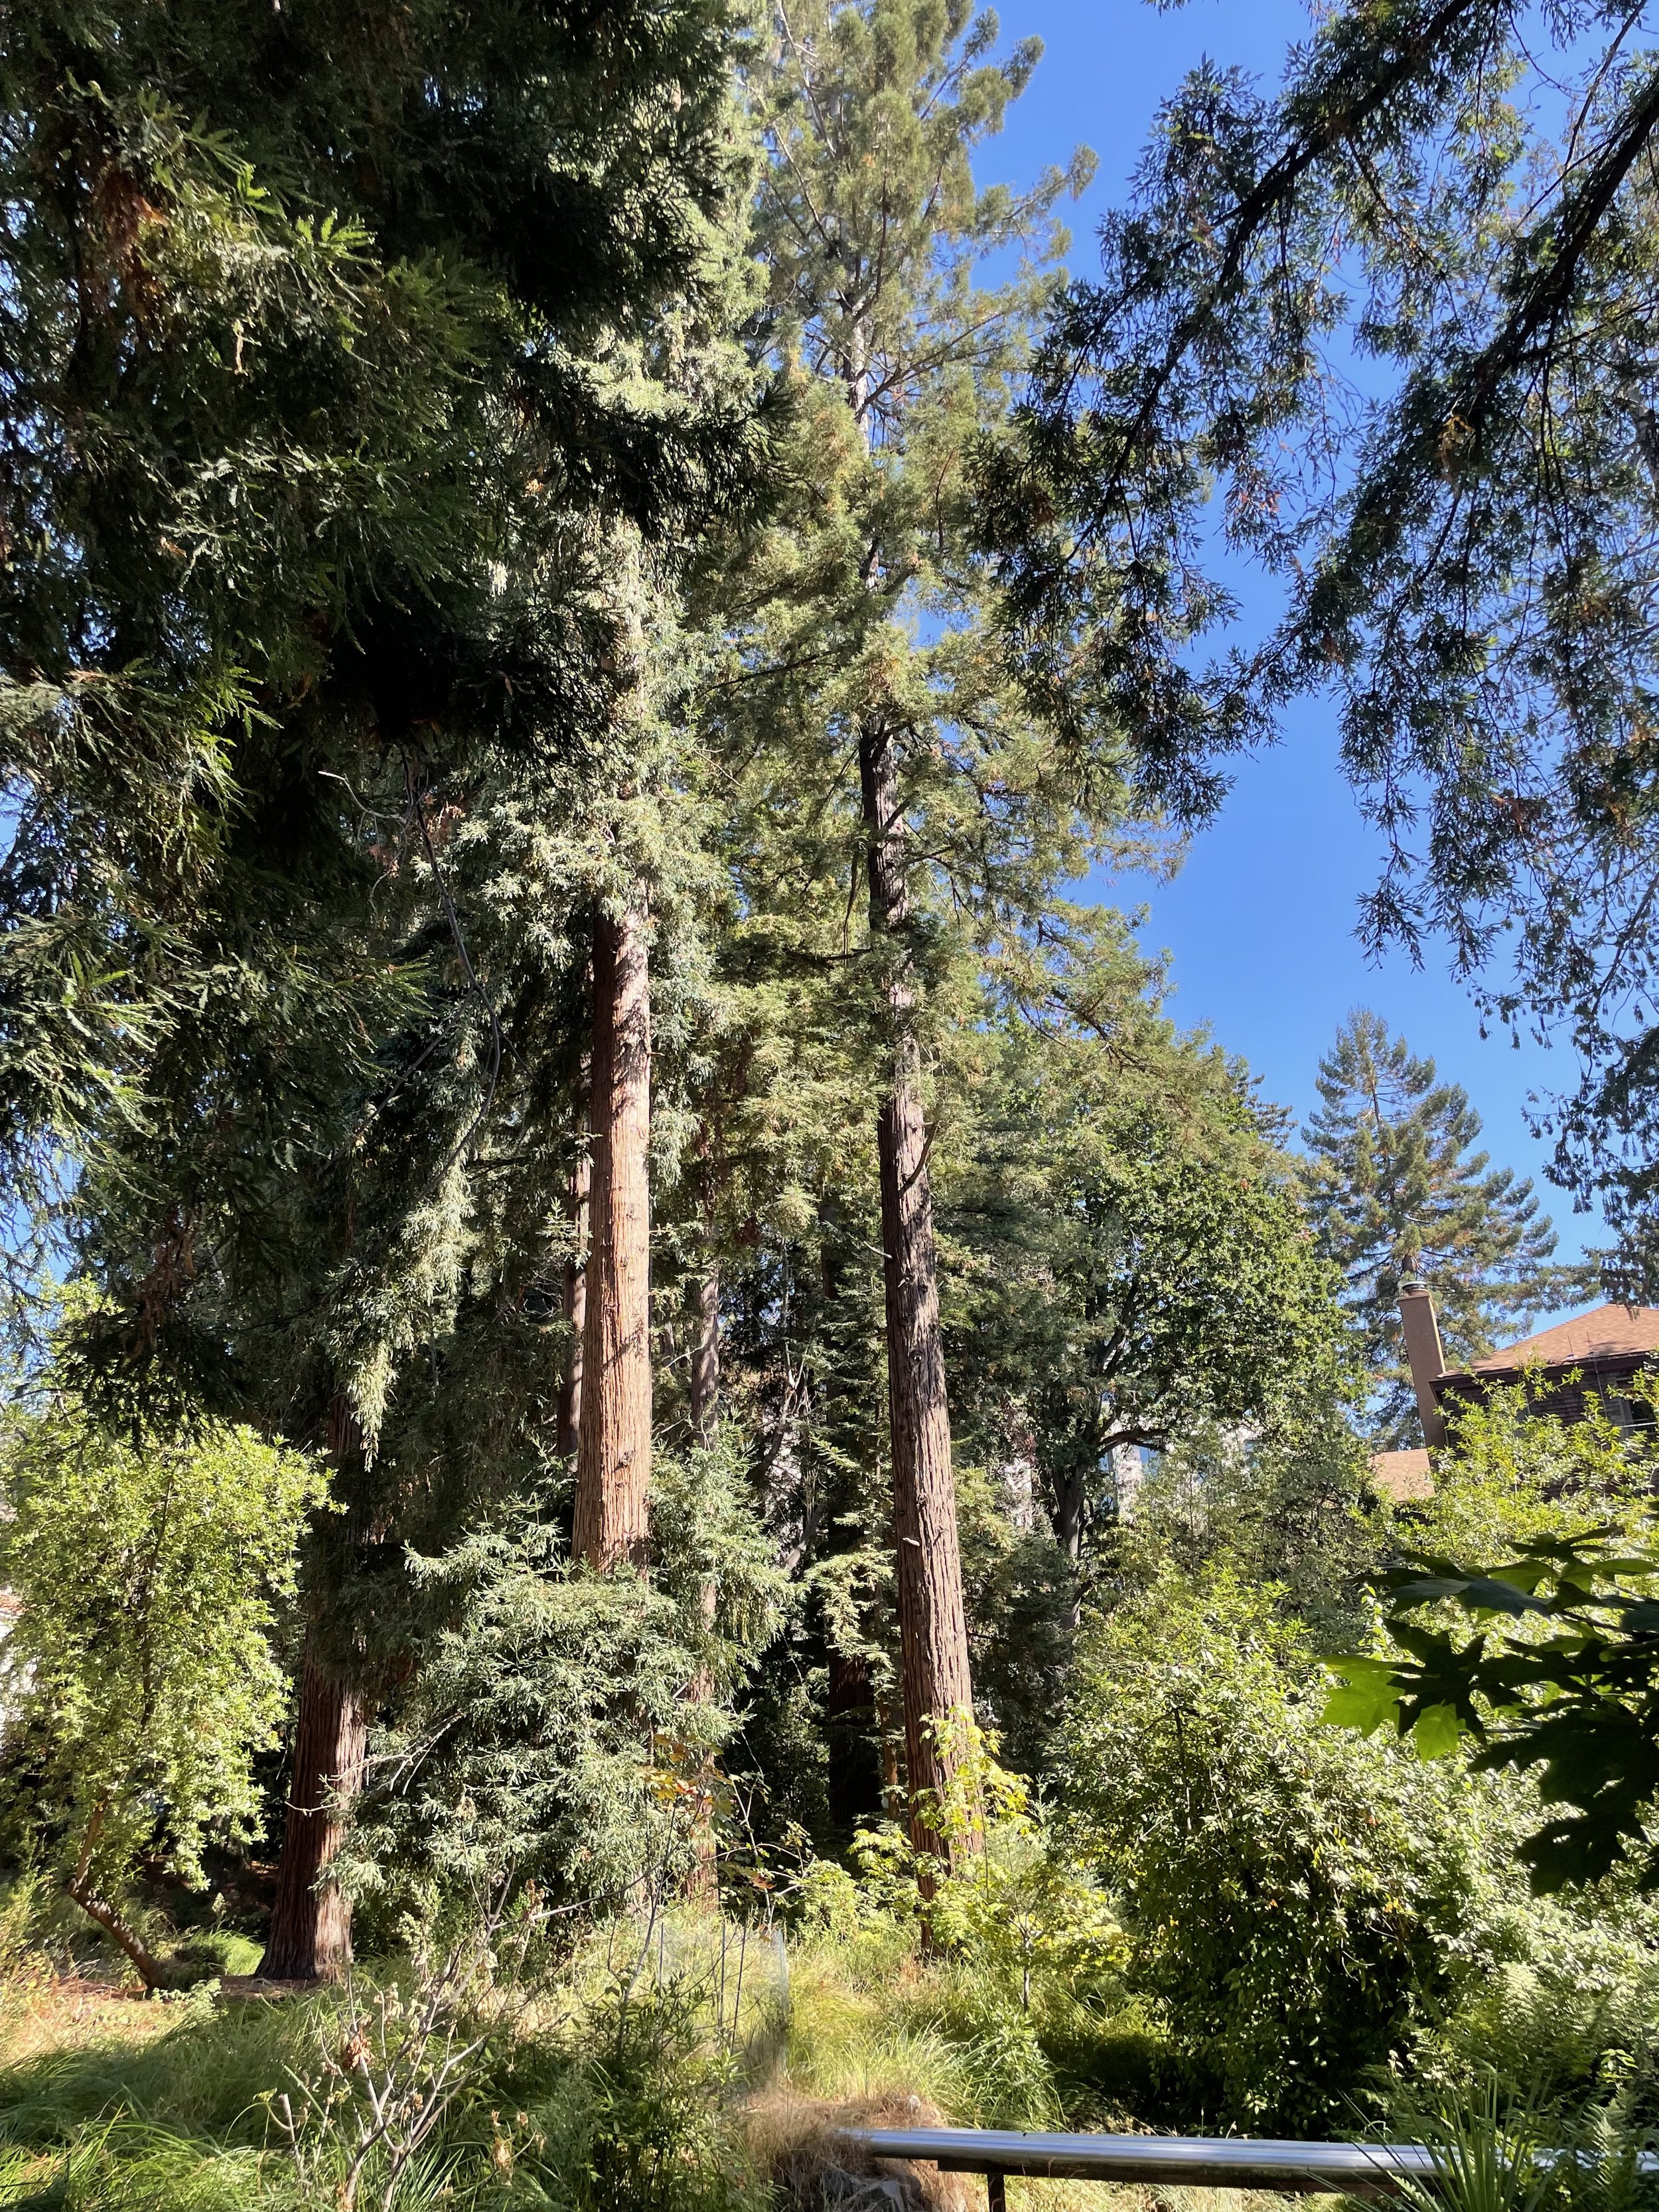 redwoods on campus.jpg